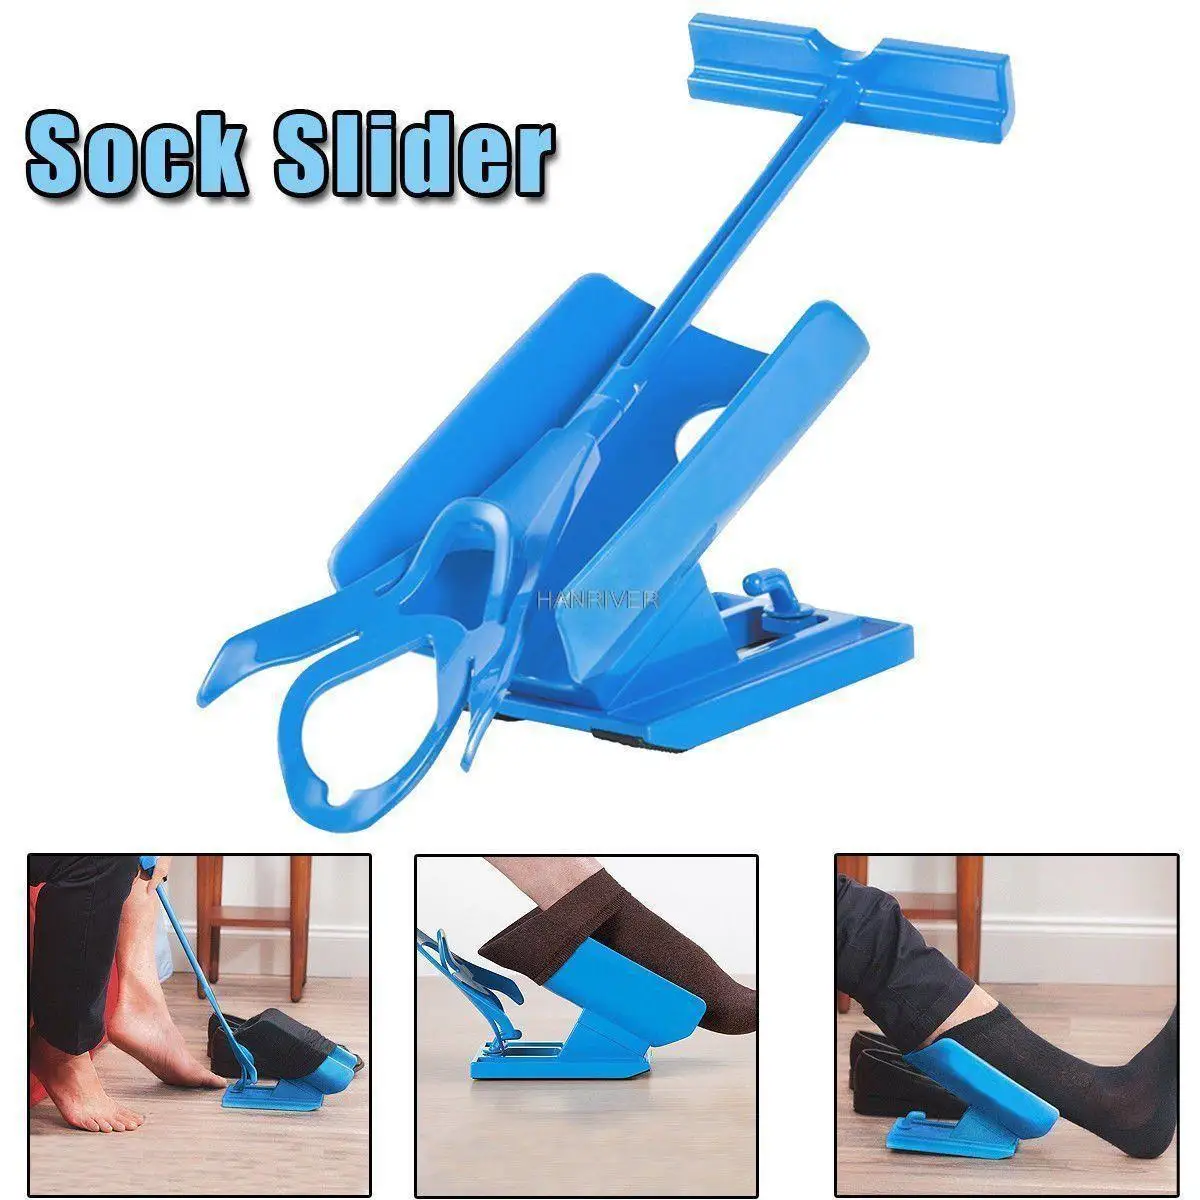 1pc Sock Slider Aid Blue Helper Kit Helps Put Socks On Off No Bending Shoe Horn Suitable For Socks